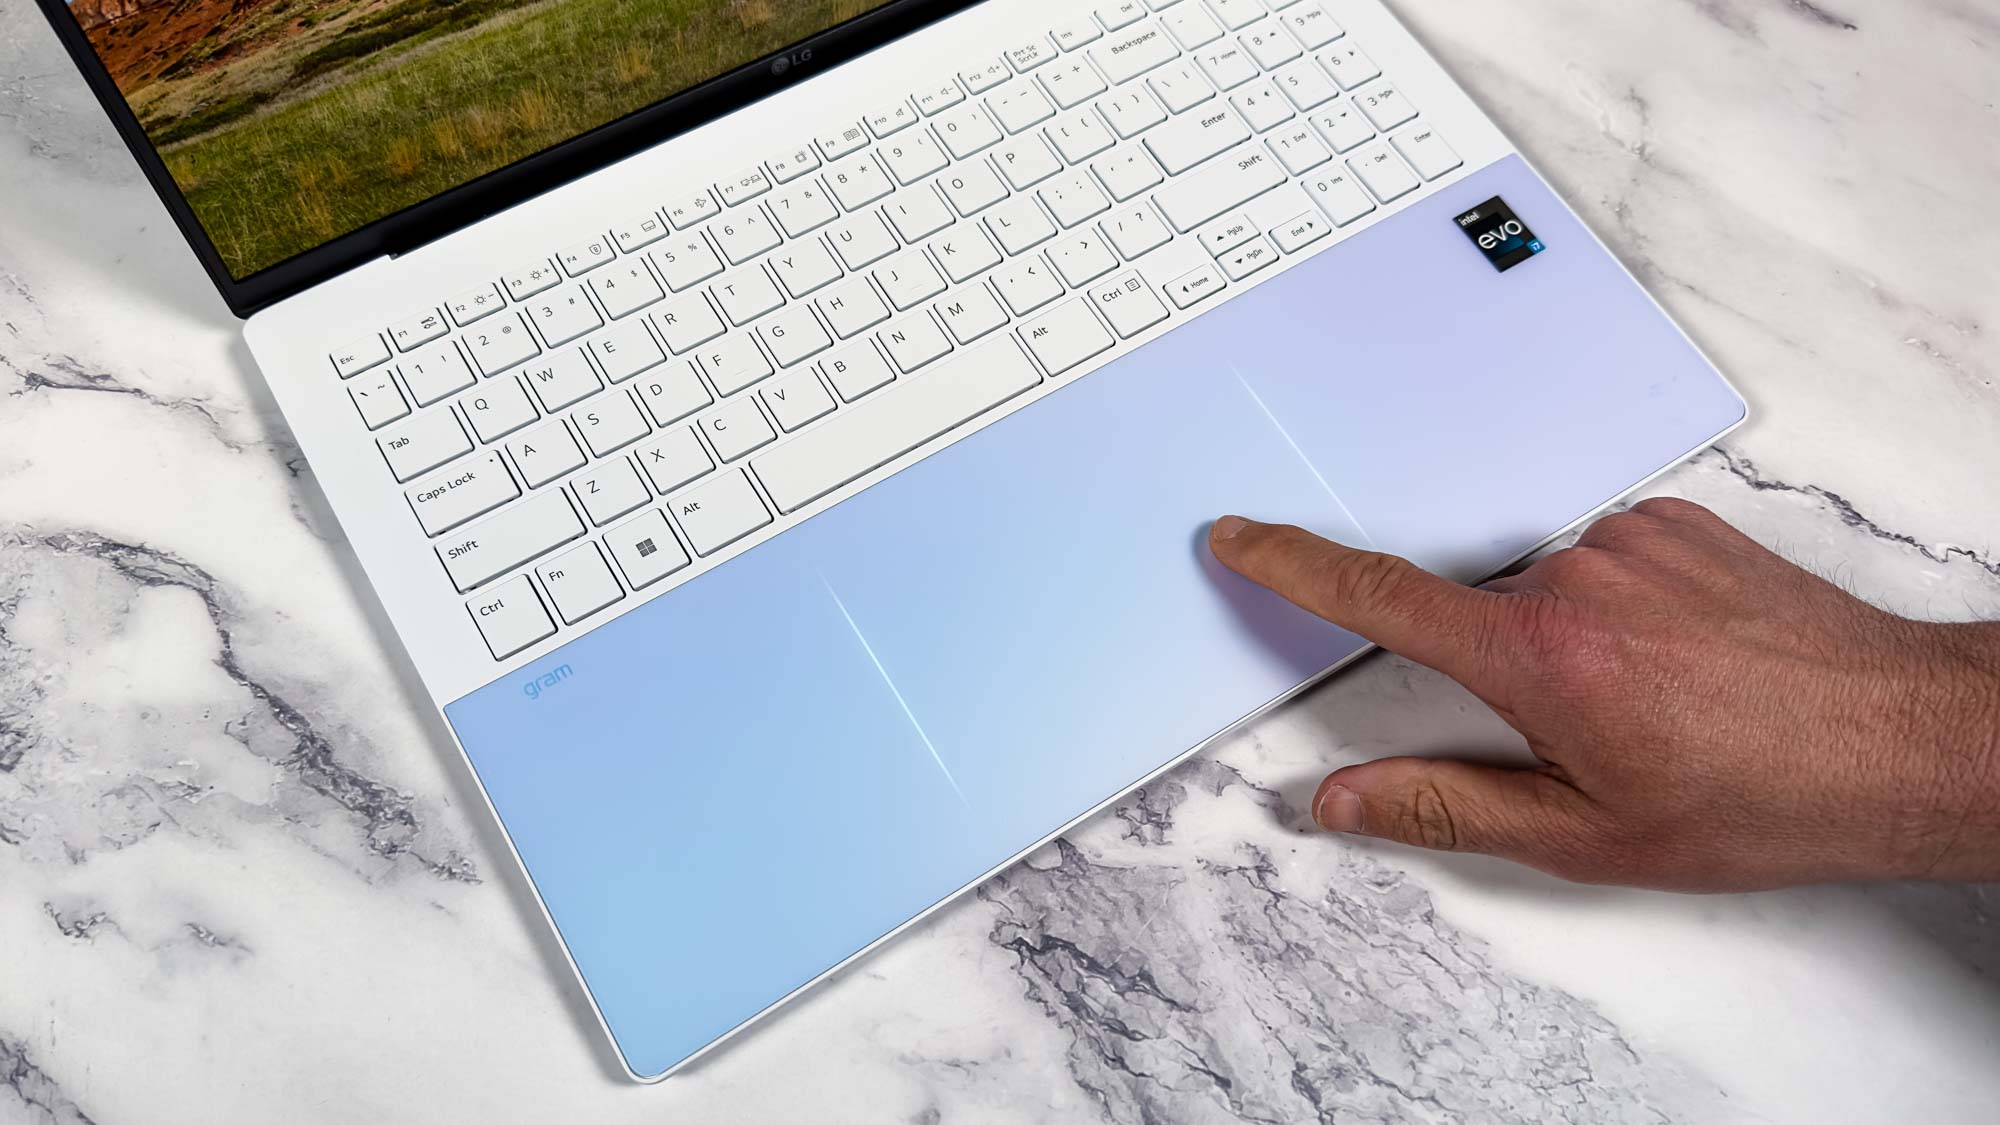 LG Gram Style laptop touchpad illuminated